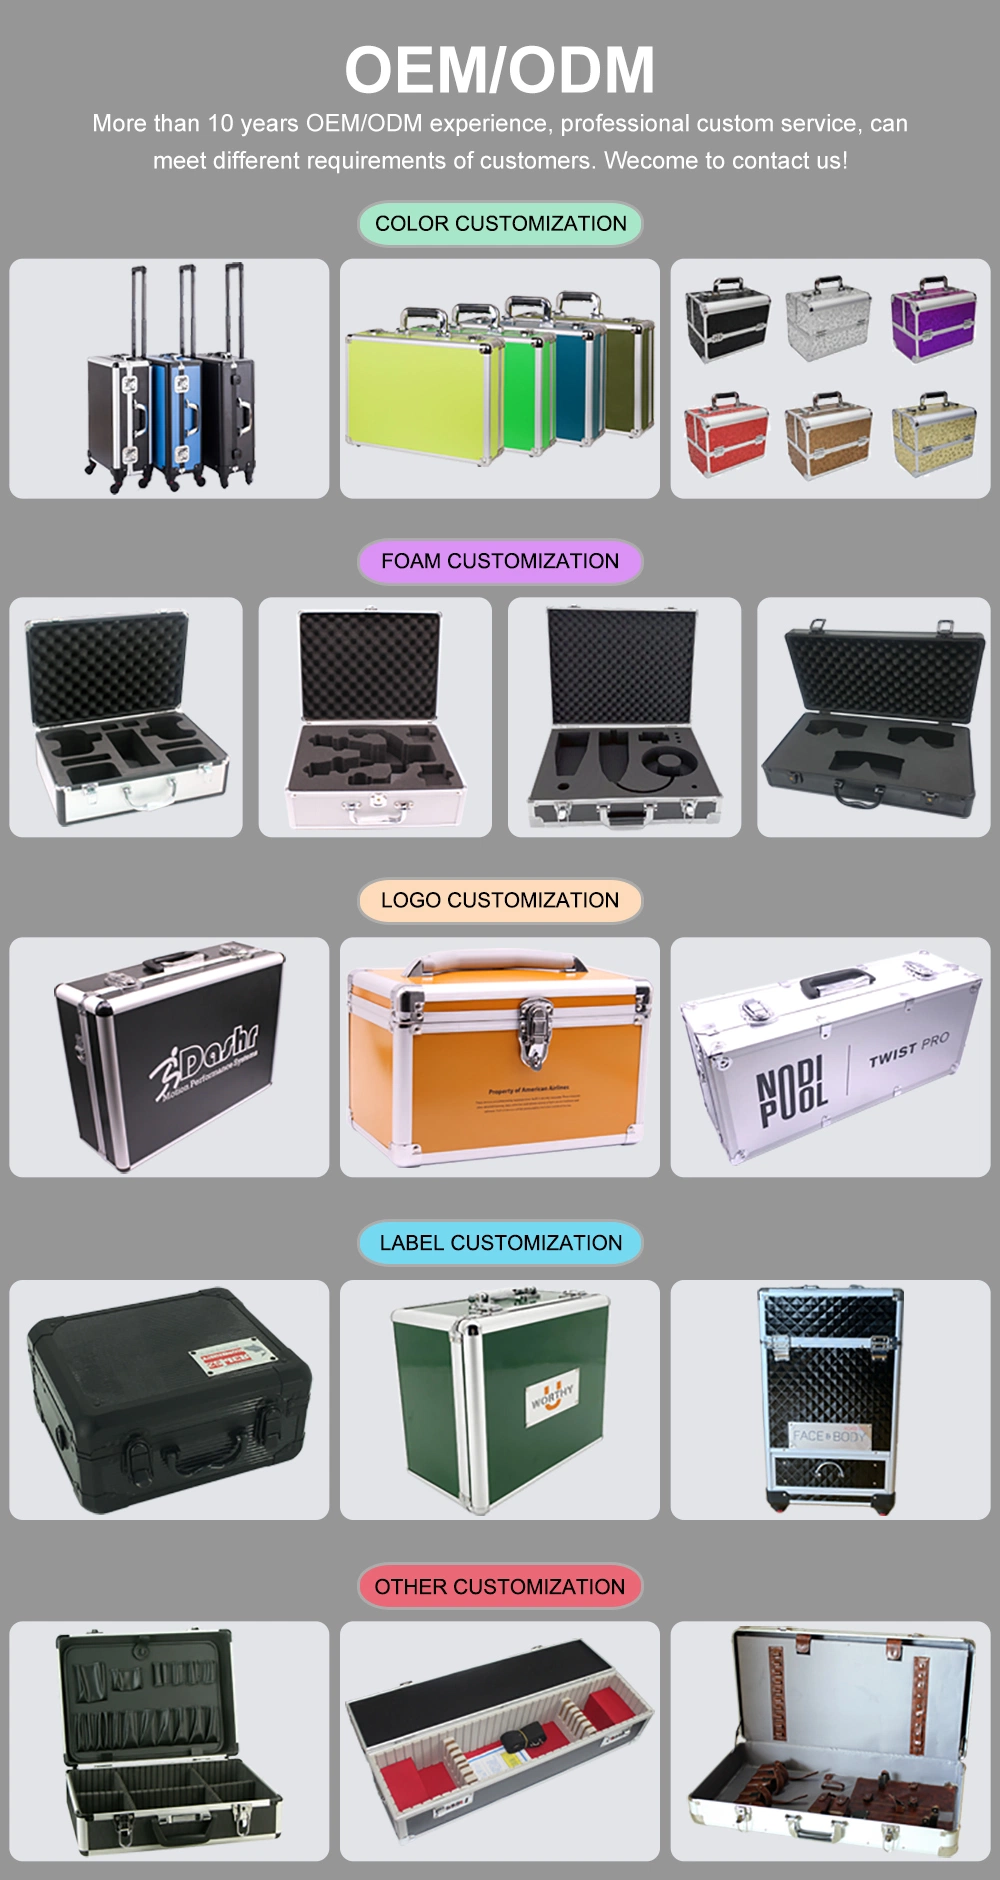 Brand New Quality Aluminum Tools Equipment Case Briefcase